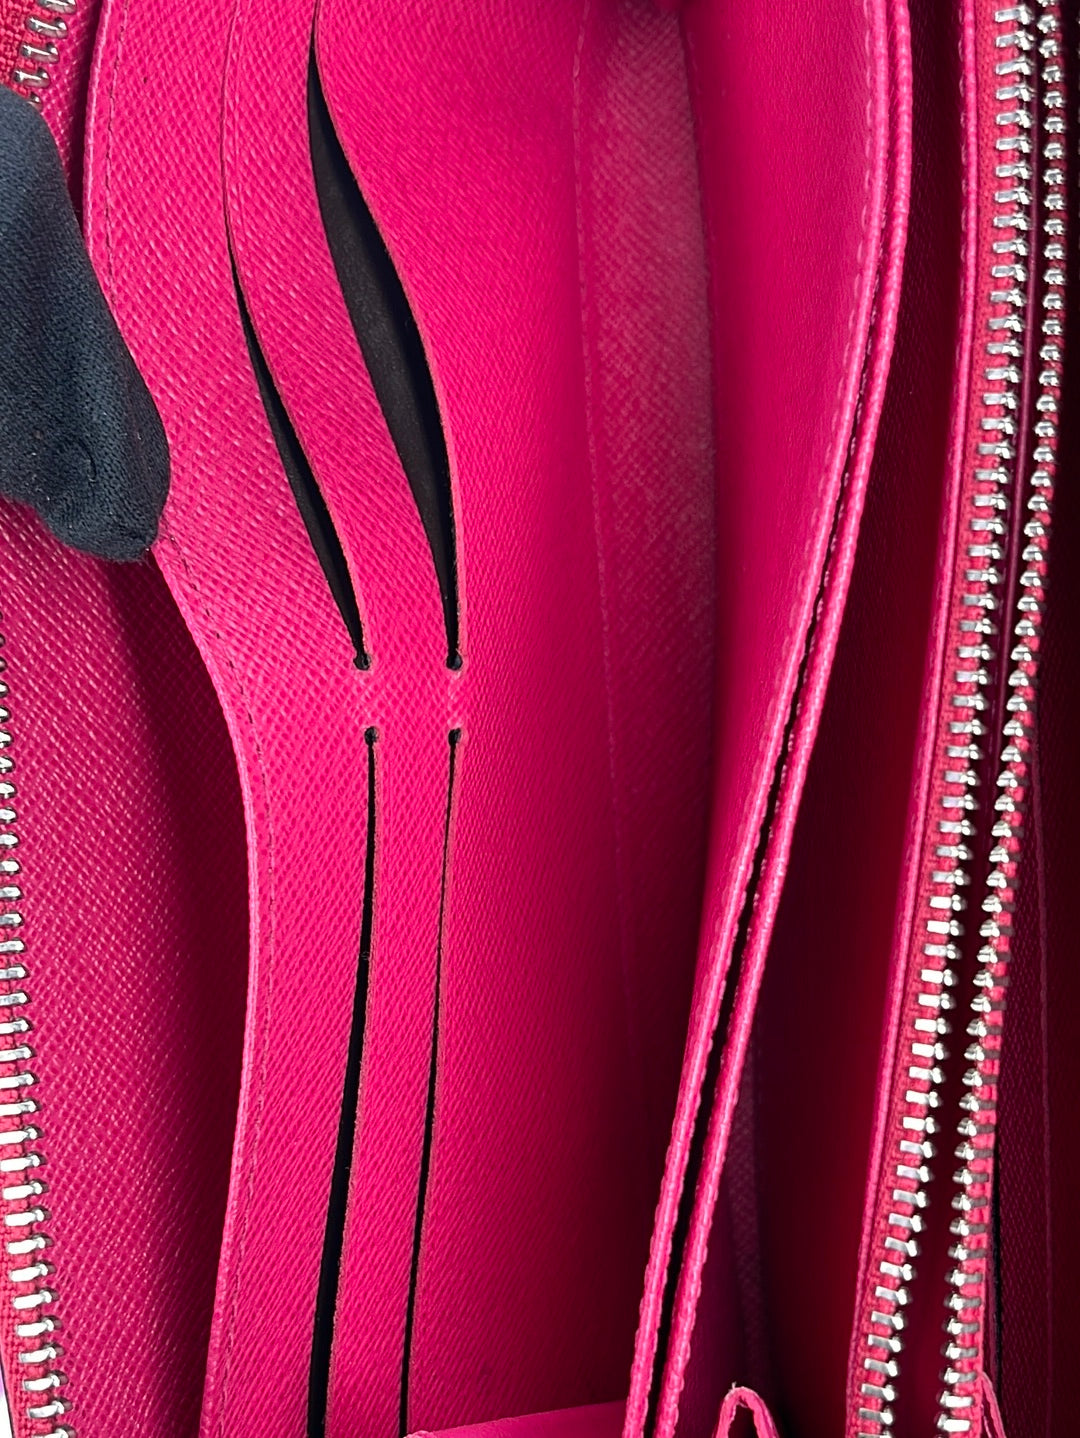 Louis Vuitton Hot Pink Epi Leather Zippy Wallet